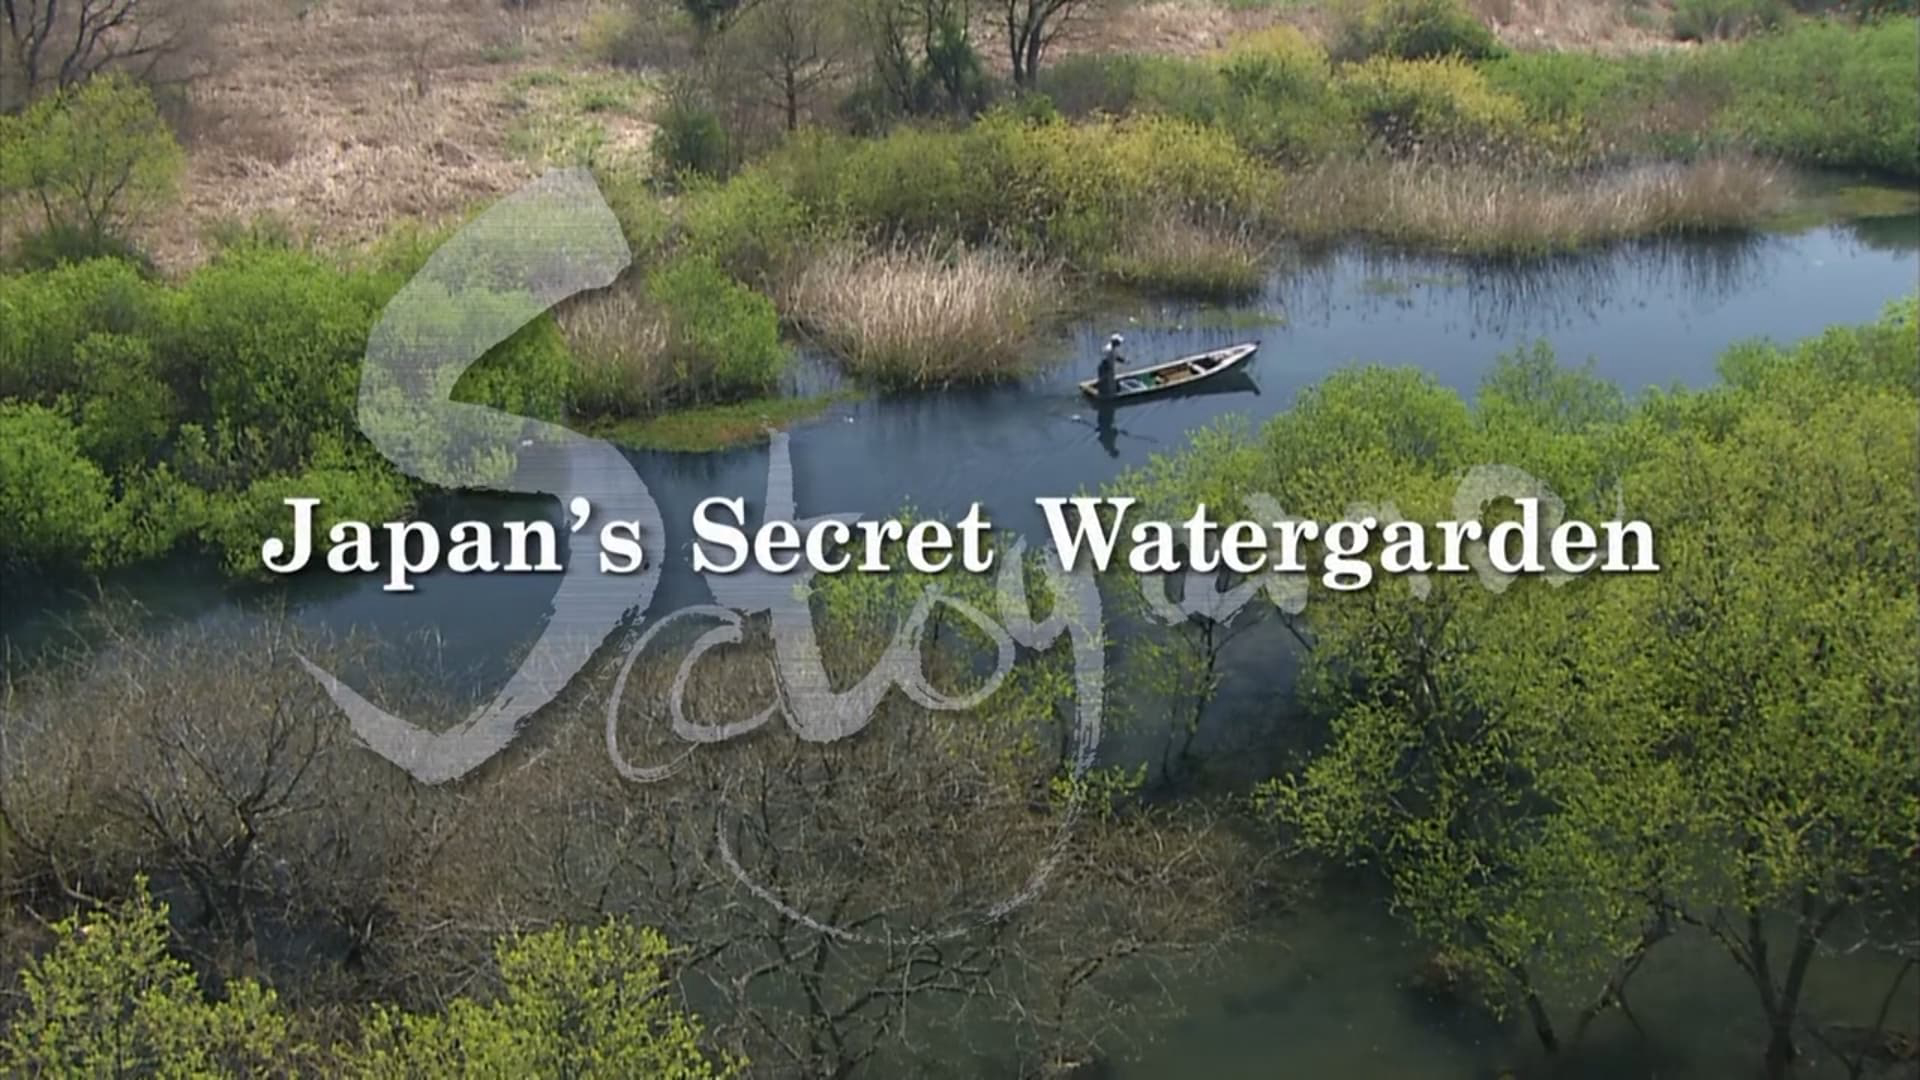 SATOYAMA: Khu Vườn Thủy Sinh Tuyệt Vời - Satoyama II: Japan's Secret Watergarden